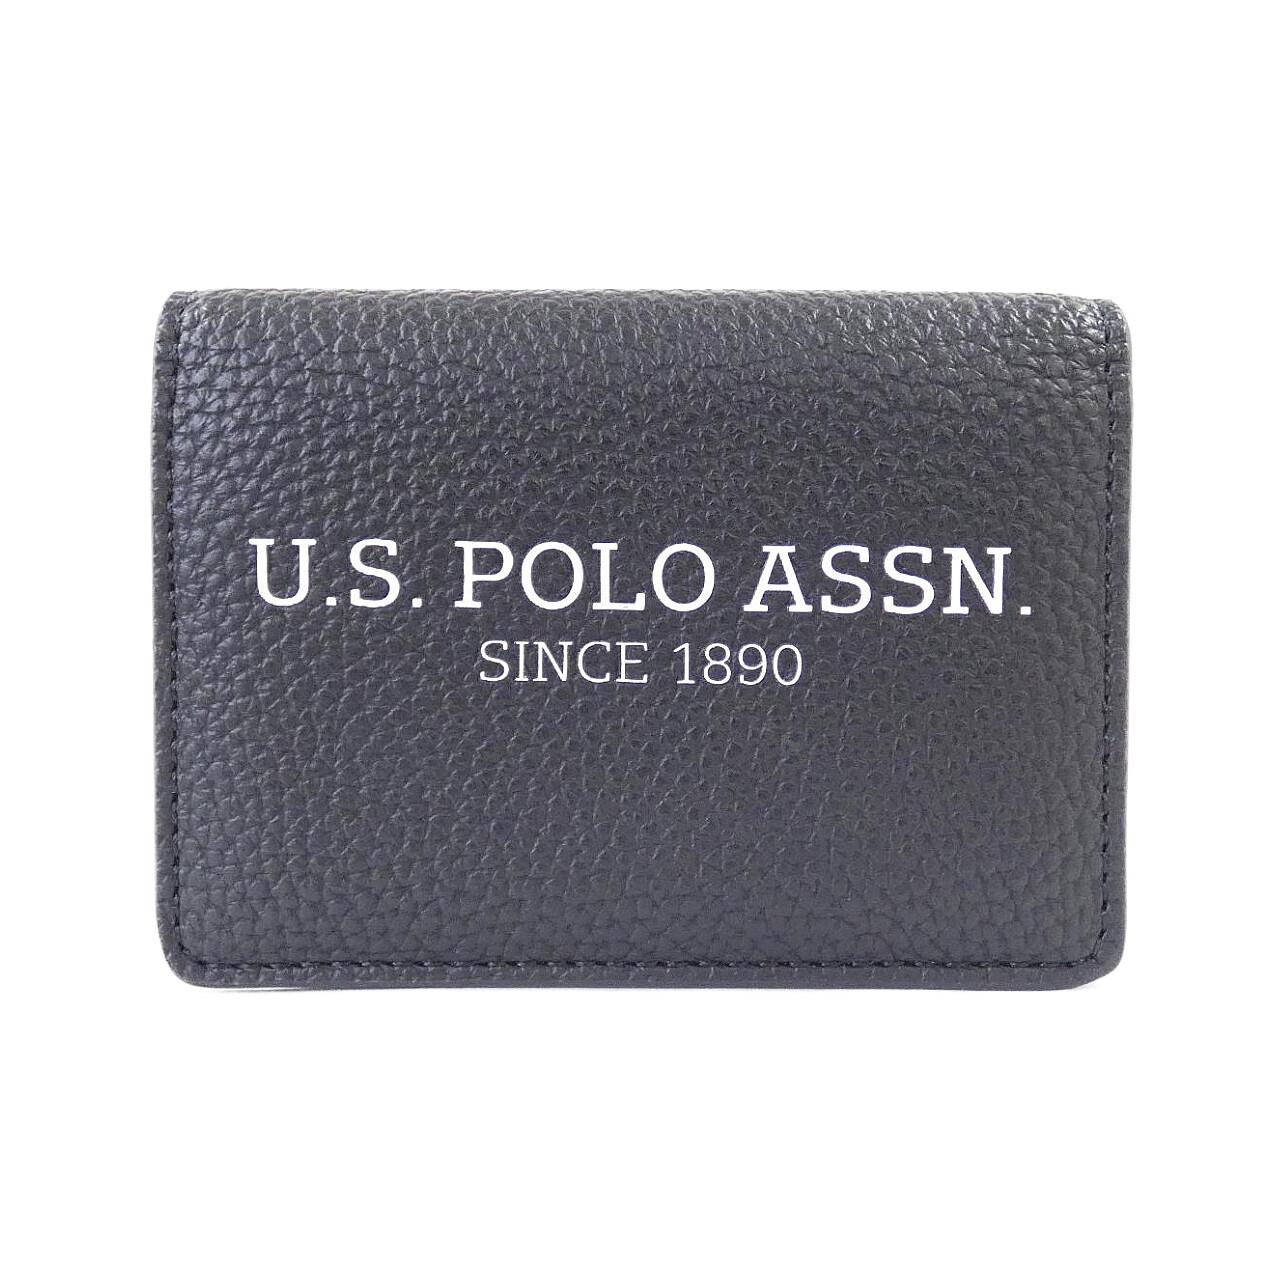 [BRAND NEW] U.S.POLO ASSN. USPA2591 Wallet